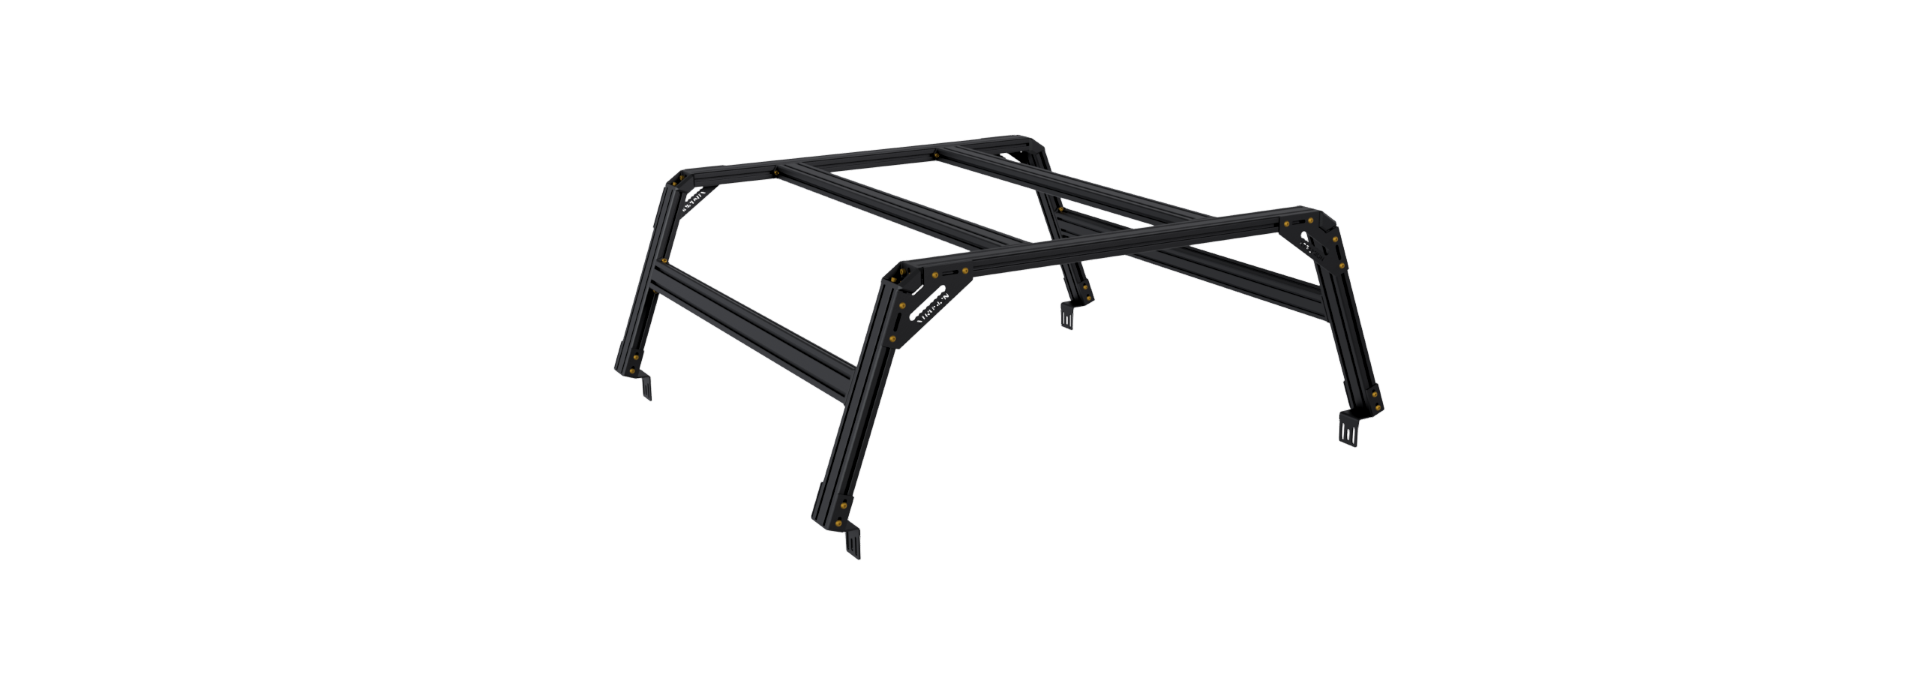 XTR1 Build-Your-Own Bed Rack - Nissan Titan